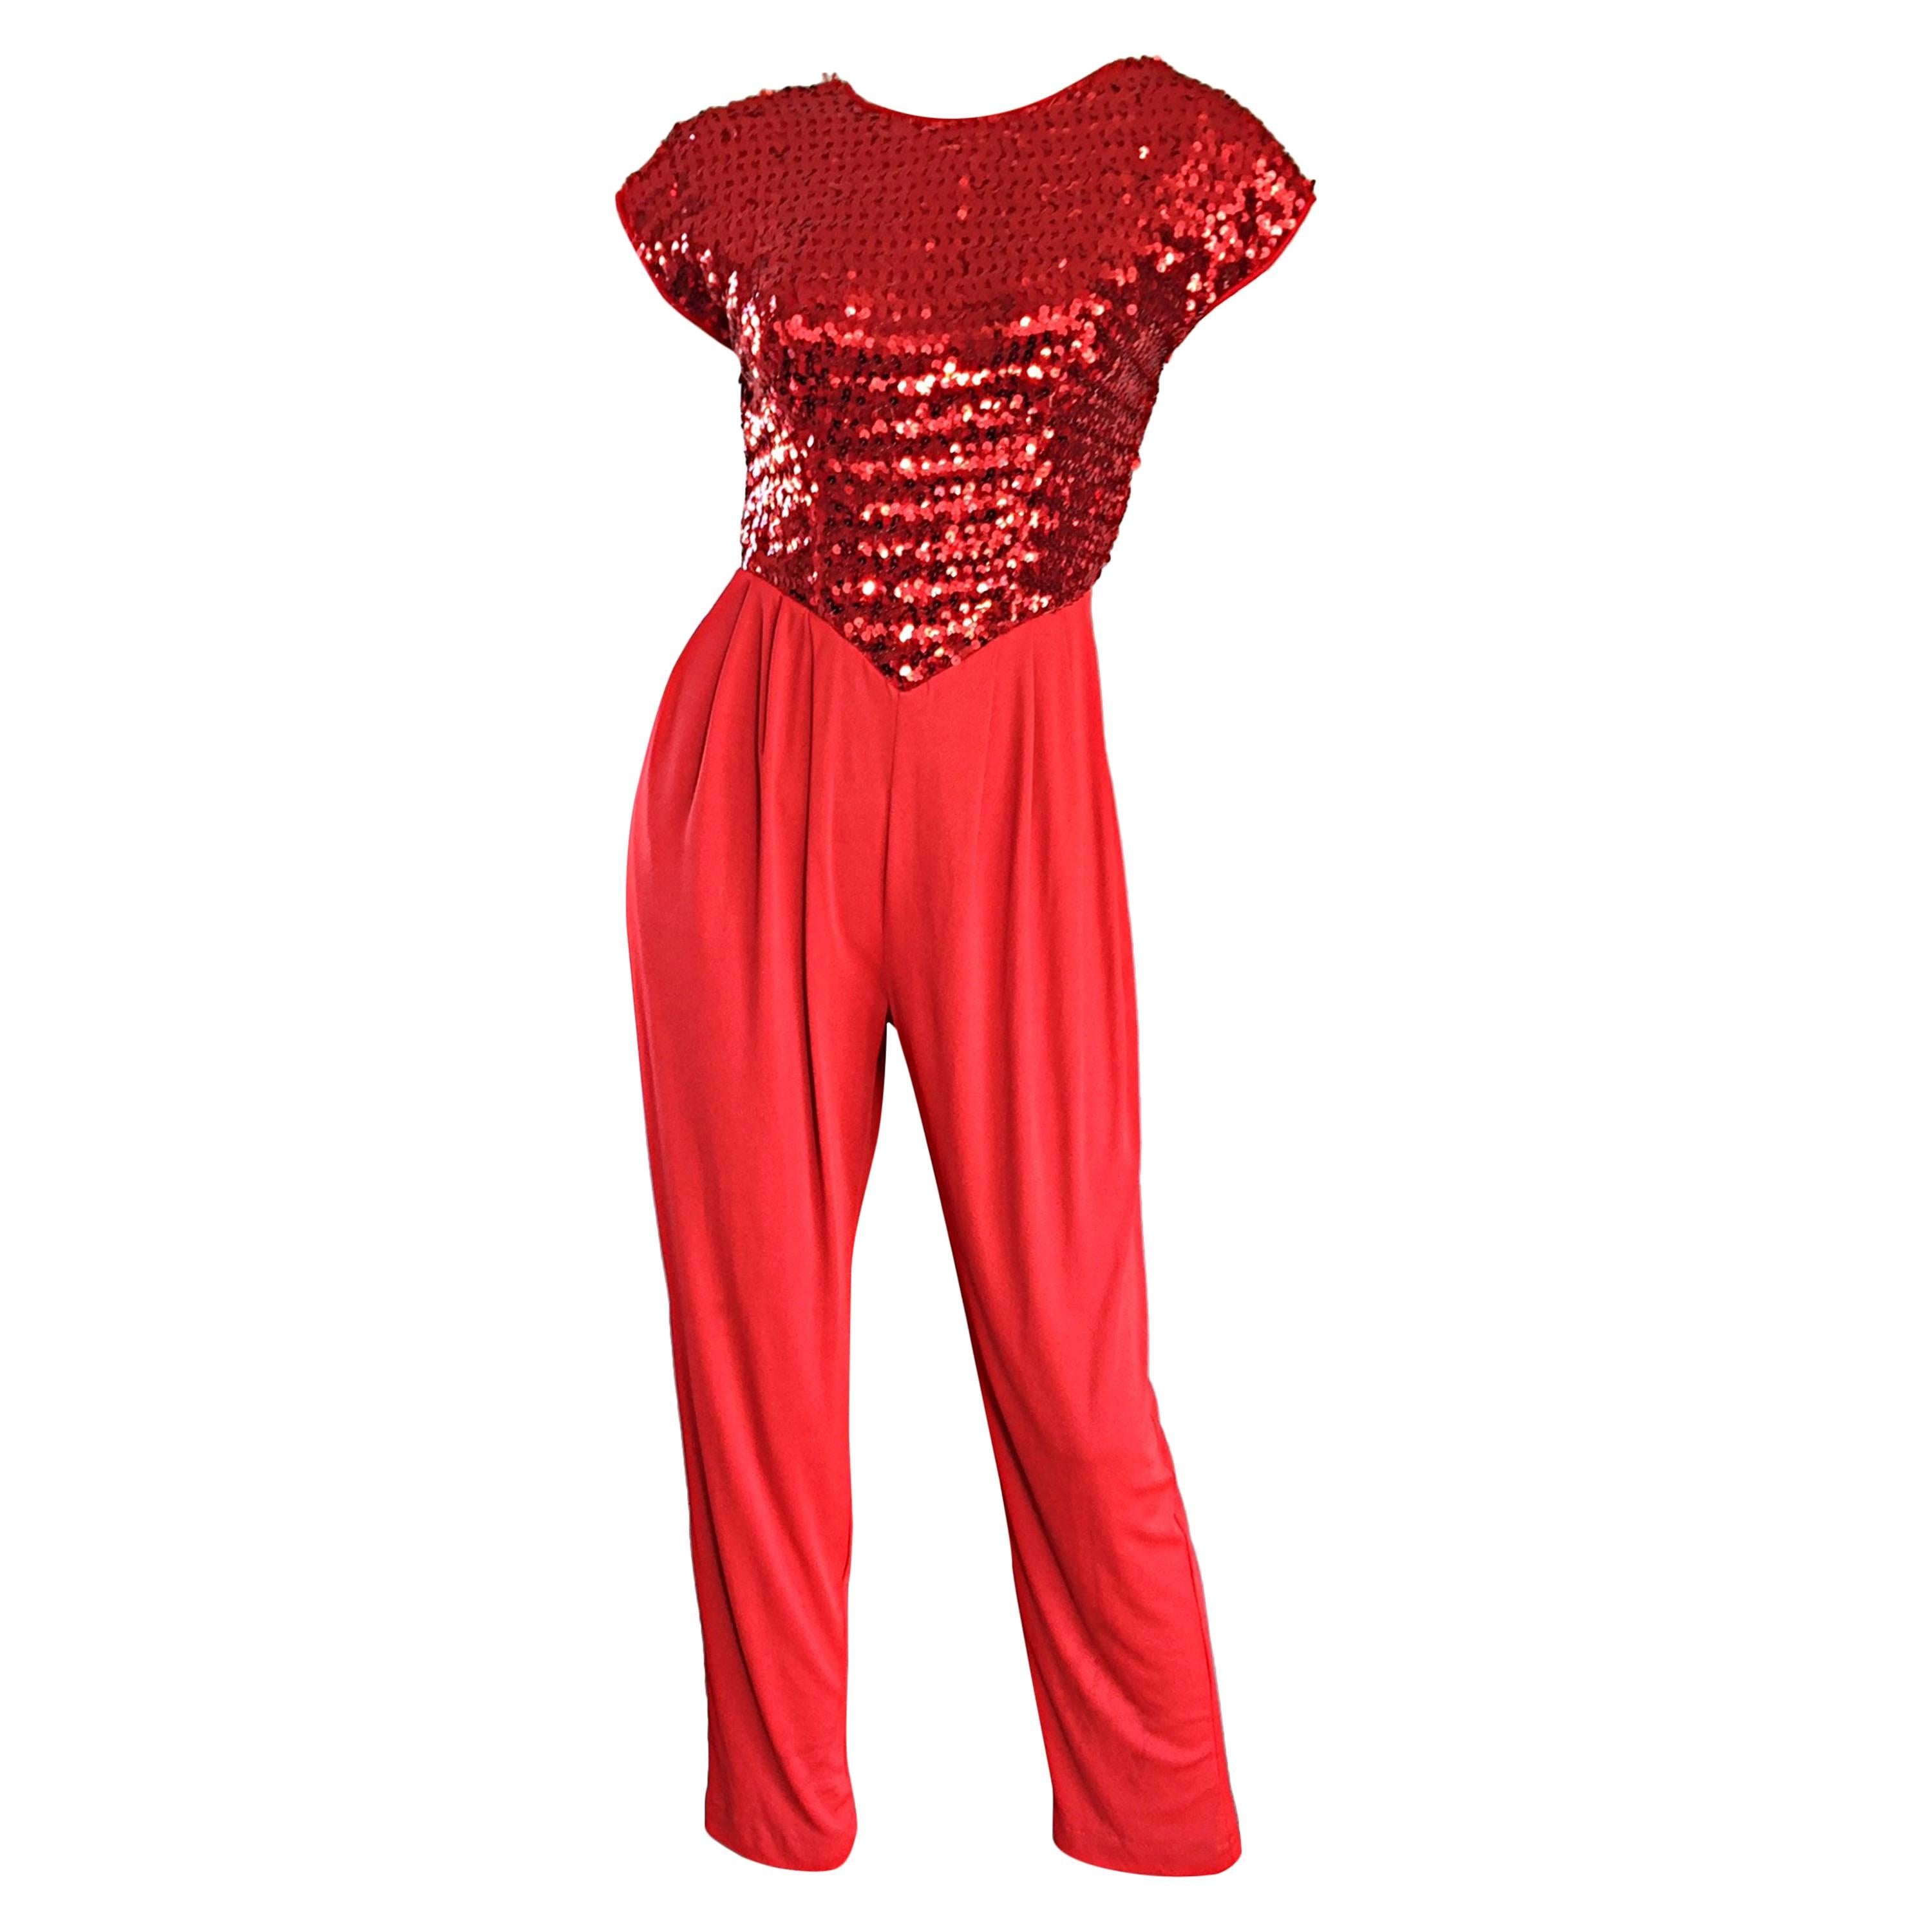 Lipstick Red Vintage Studio 54 Sequin + Jersey Jumpsuit Romper Onesie Outfit